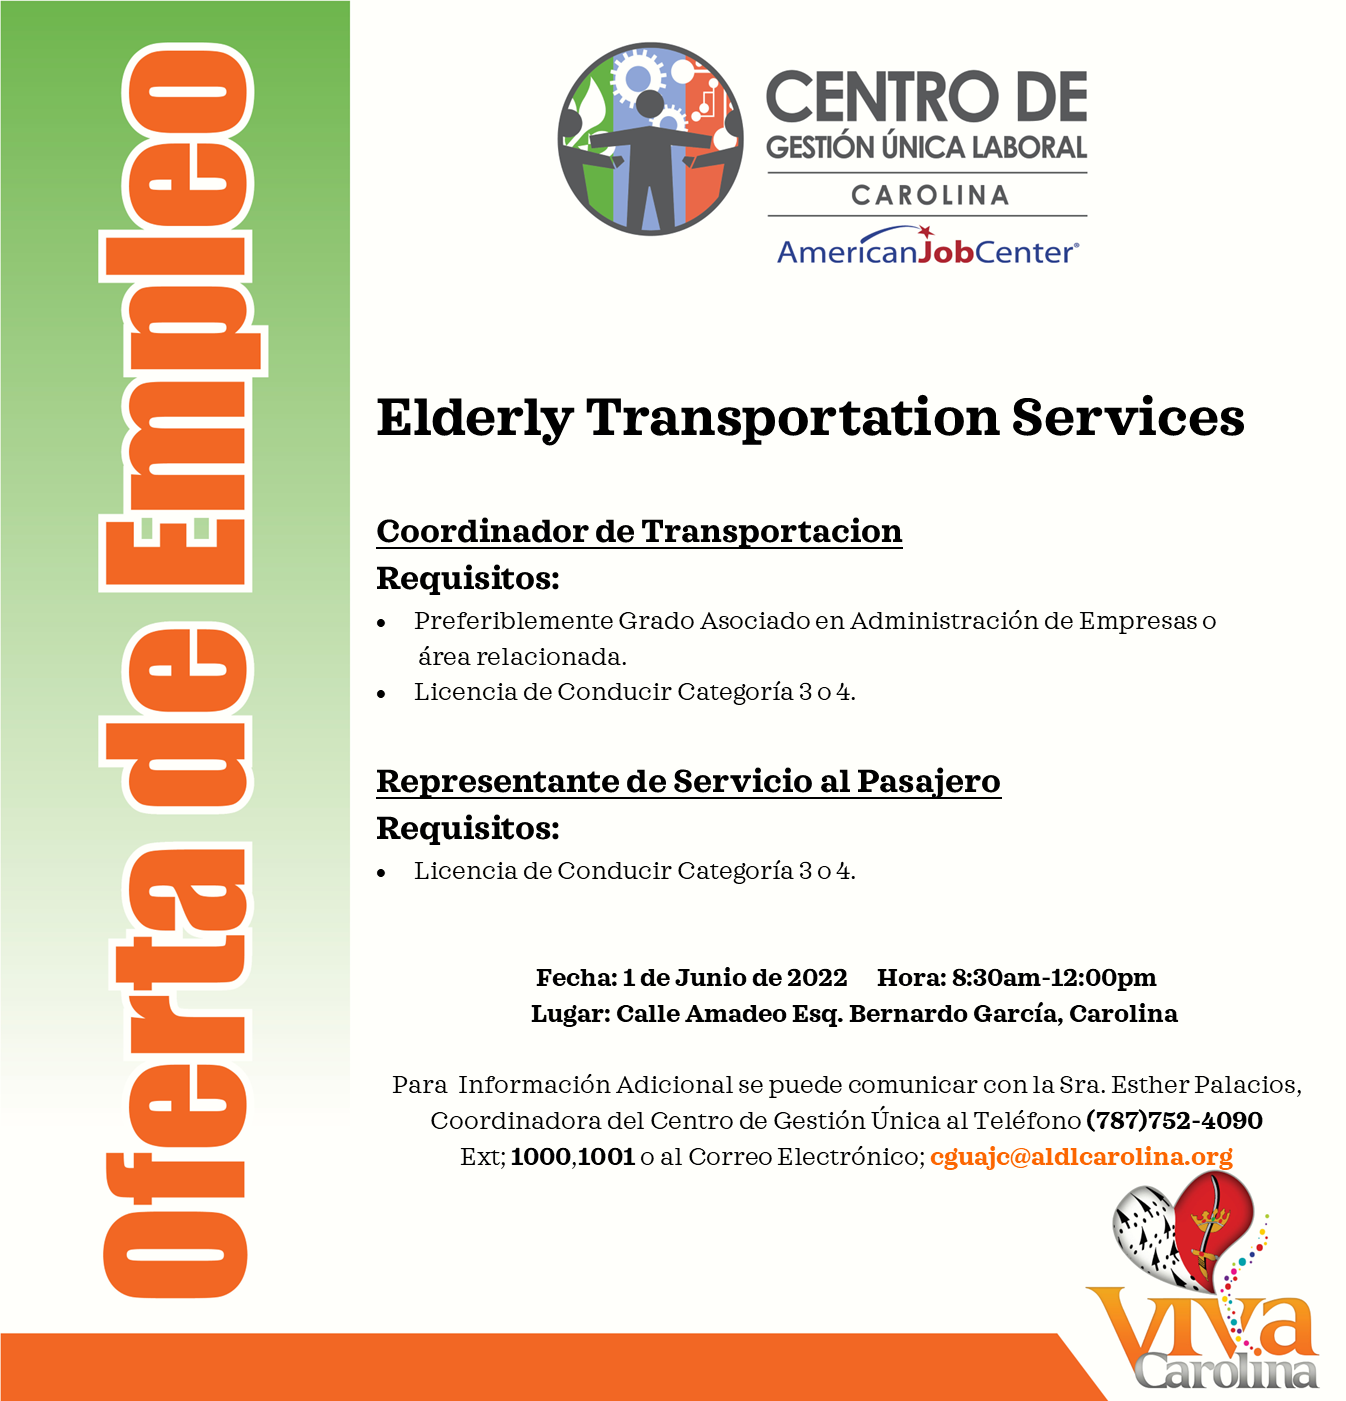 Oferta de Empleo Elderly Transportation Services